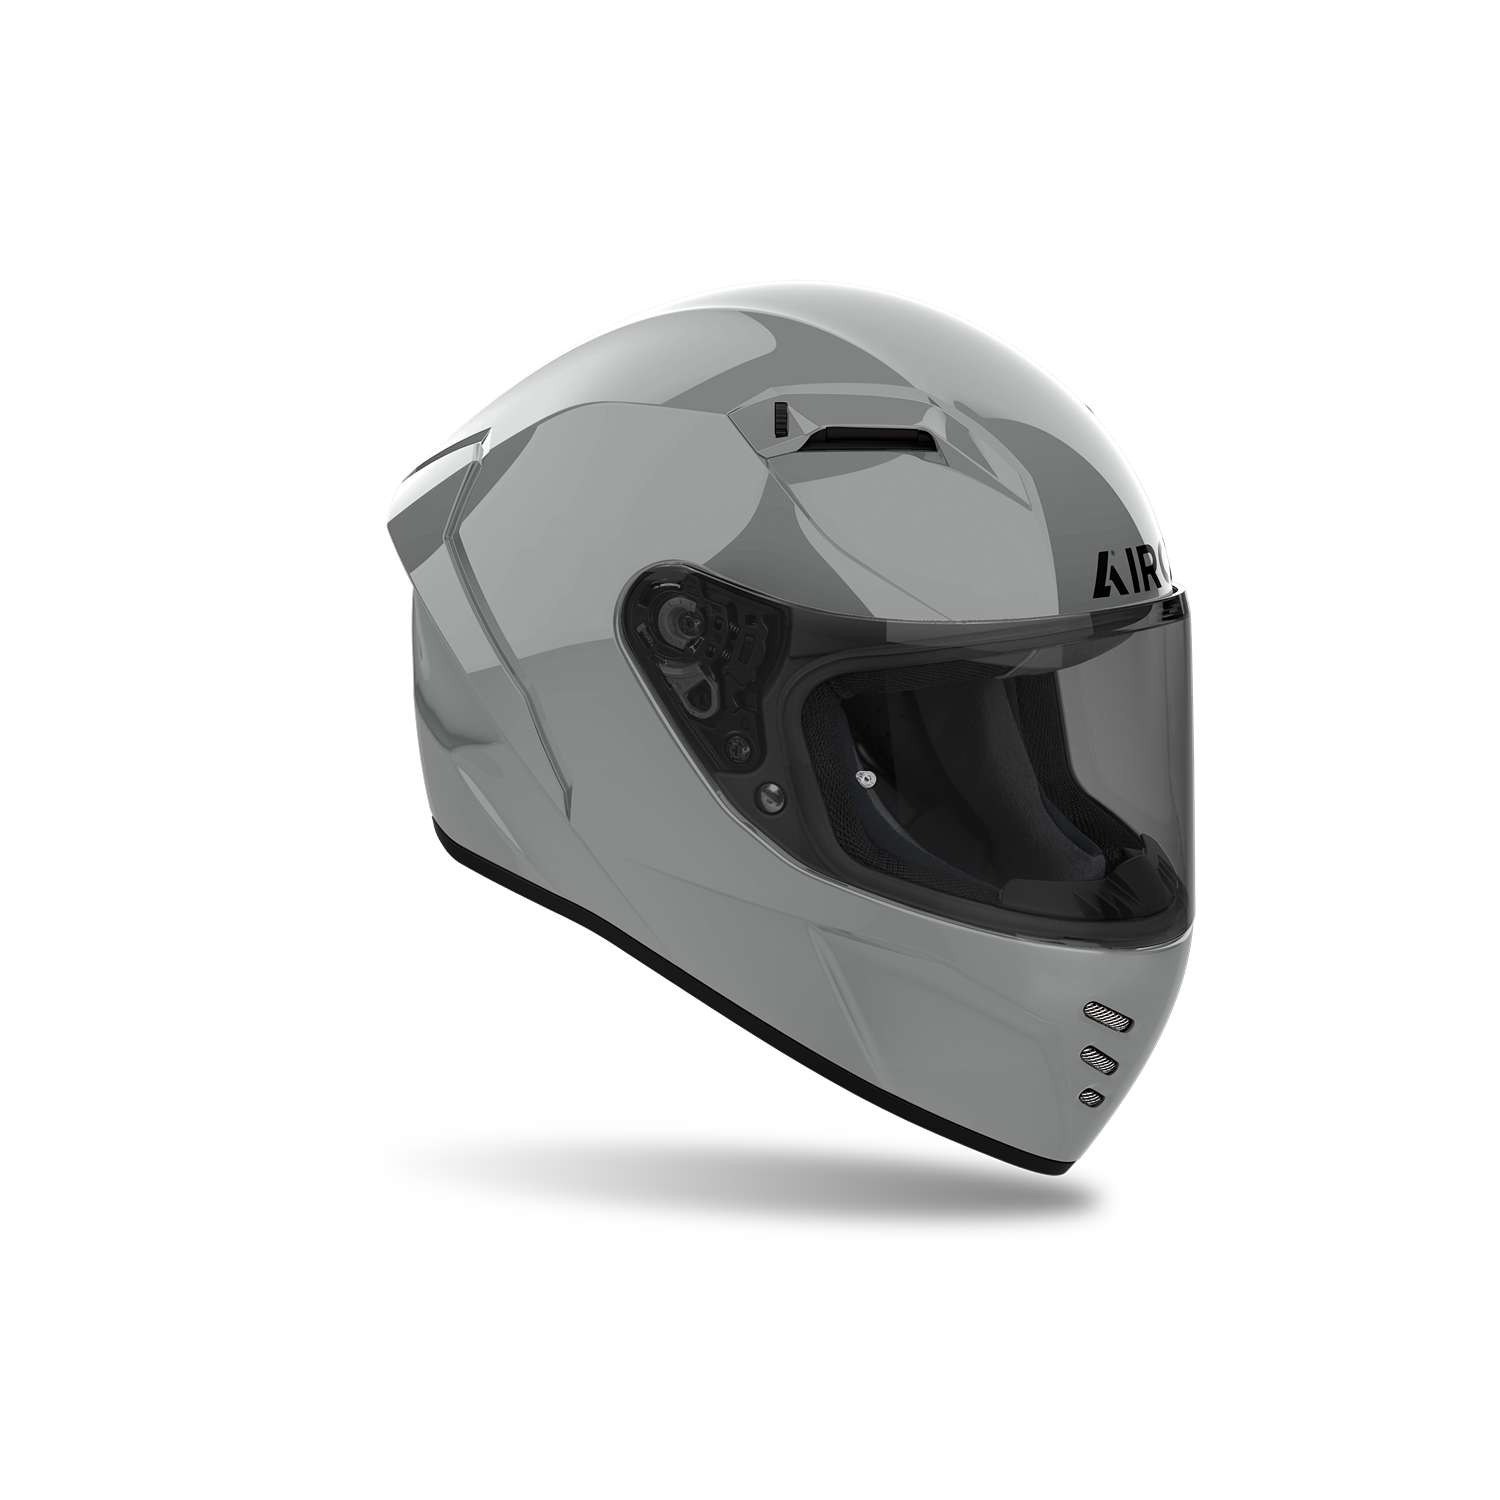 Image of EU Airoh Helmet Connor Light Gray Full Face Helmet Taille XL